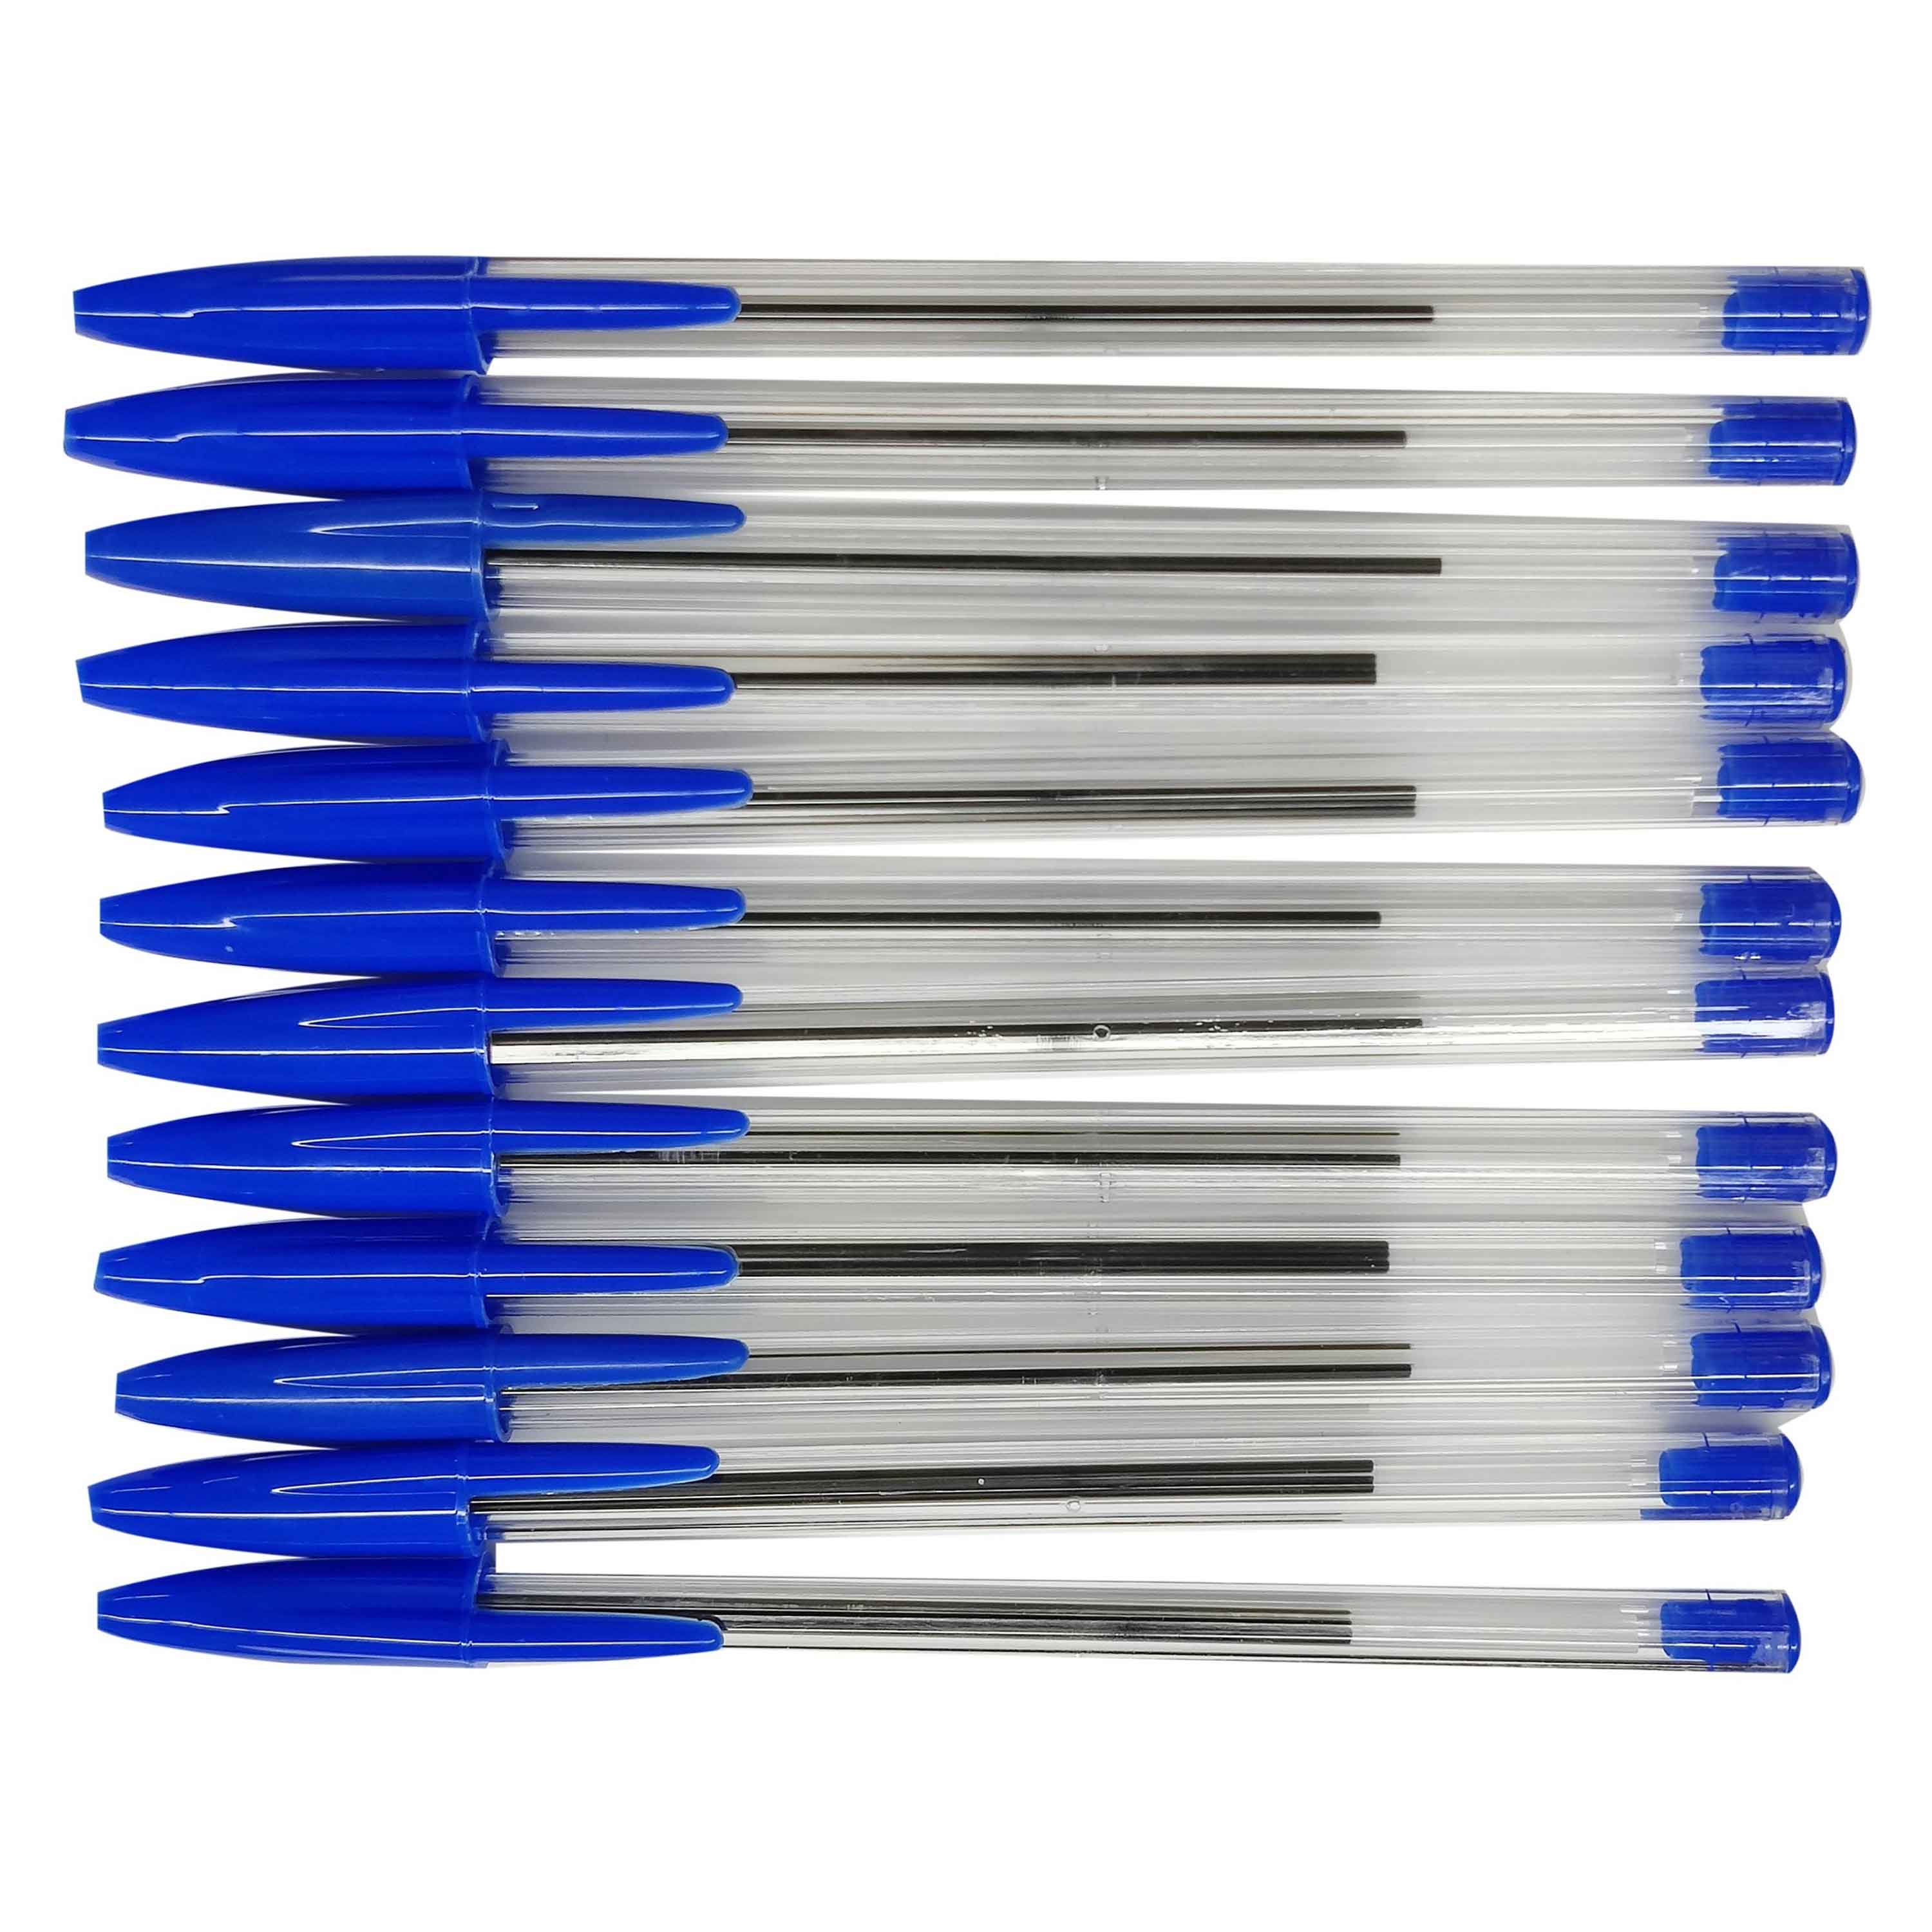 Bolígrafo borrable, 1 unidad, bolígrafos de gel azul de 0.020 in, bolígrafo  de prensa de dibujos animados, lindos accesorios de oficina, suministros